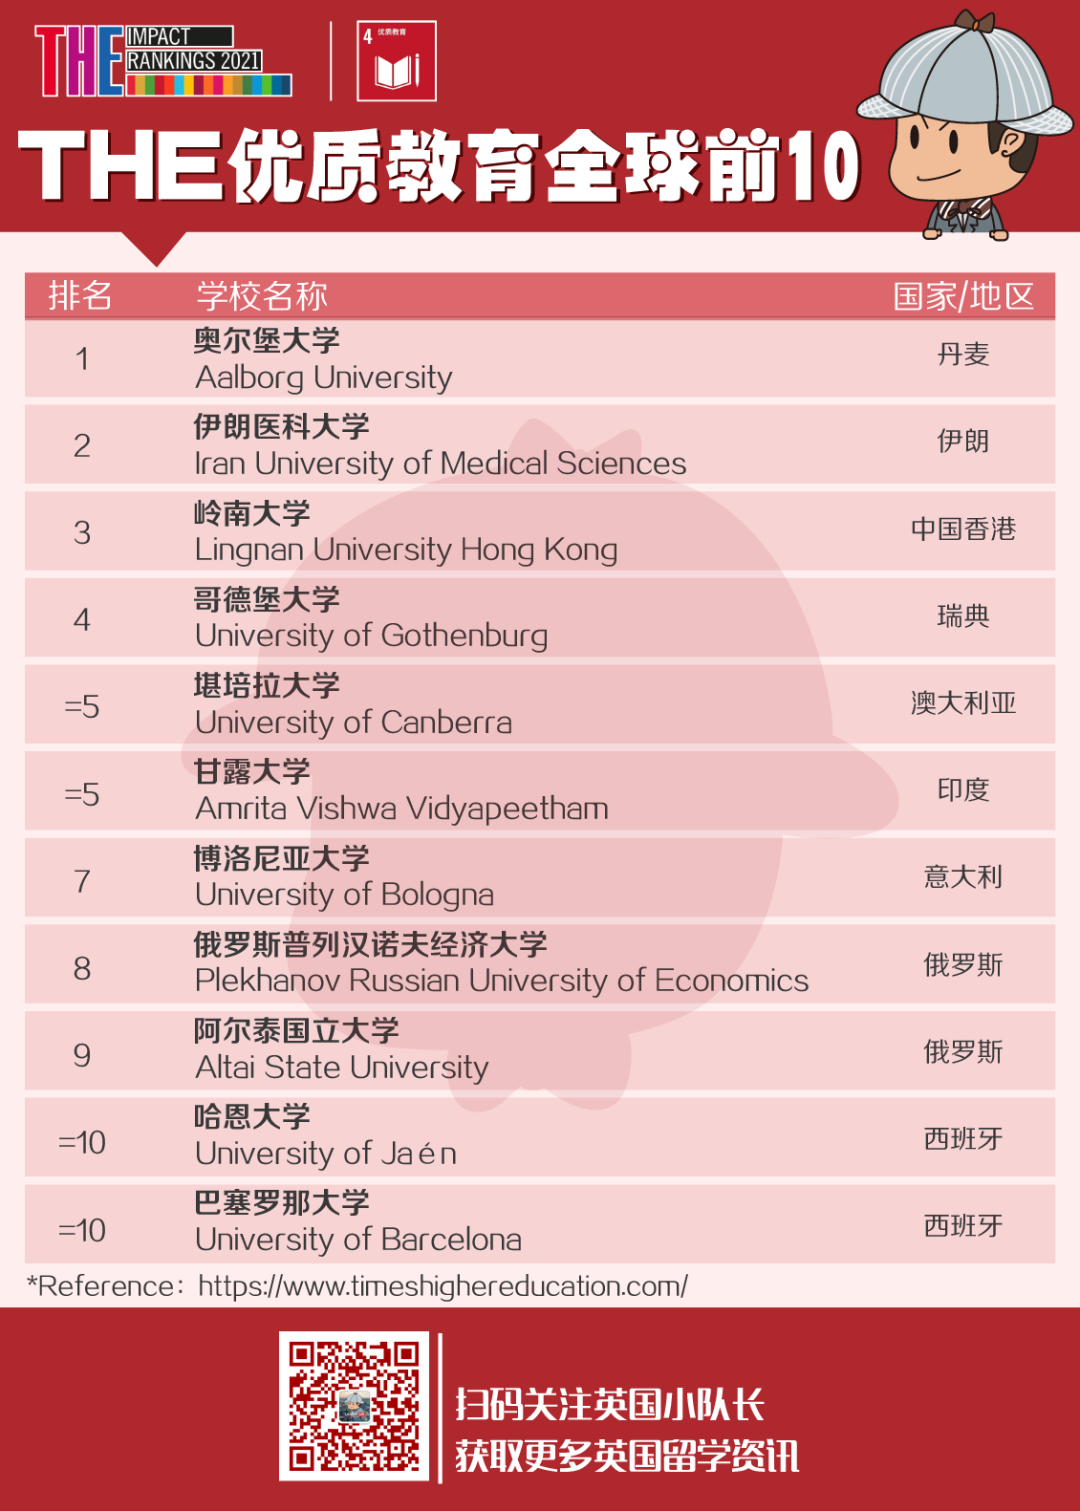 THE发布2021世界大学影响力排名，排名世界第1的高校有点令人意外  ​THE世界大学排名 排名 第13张